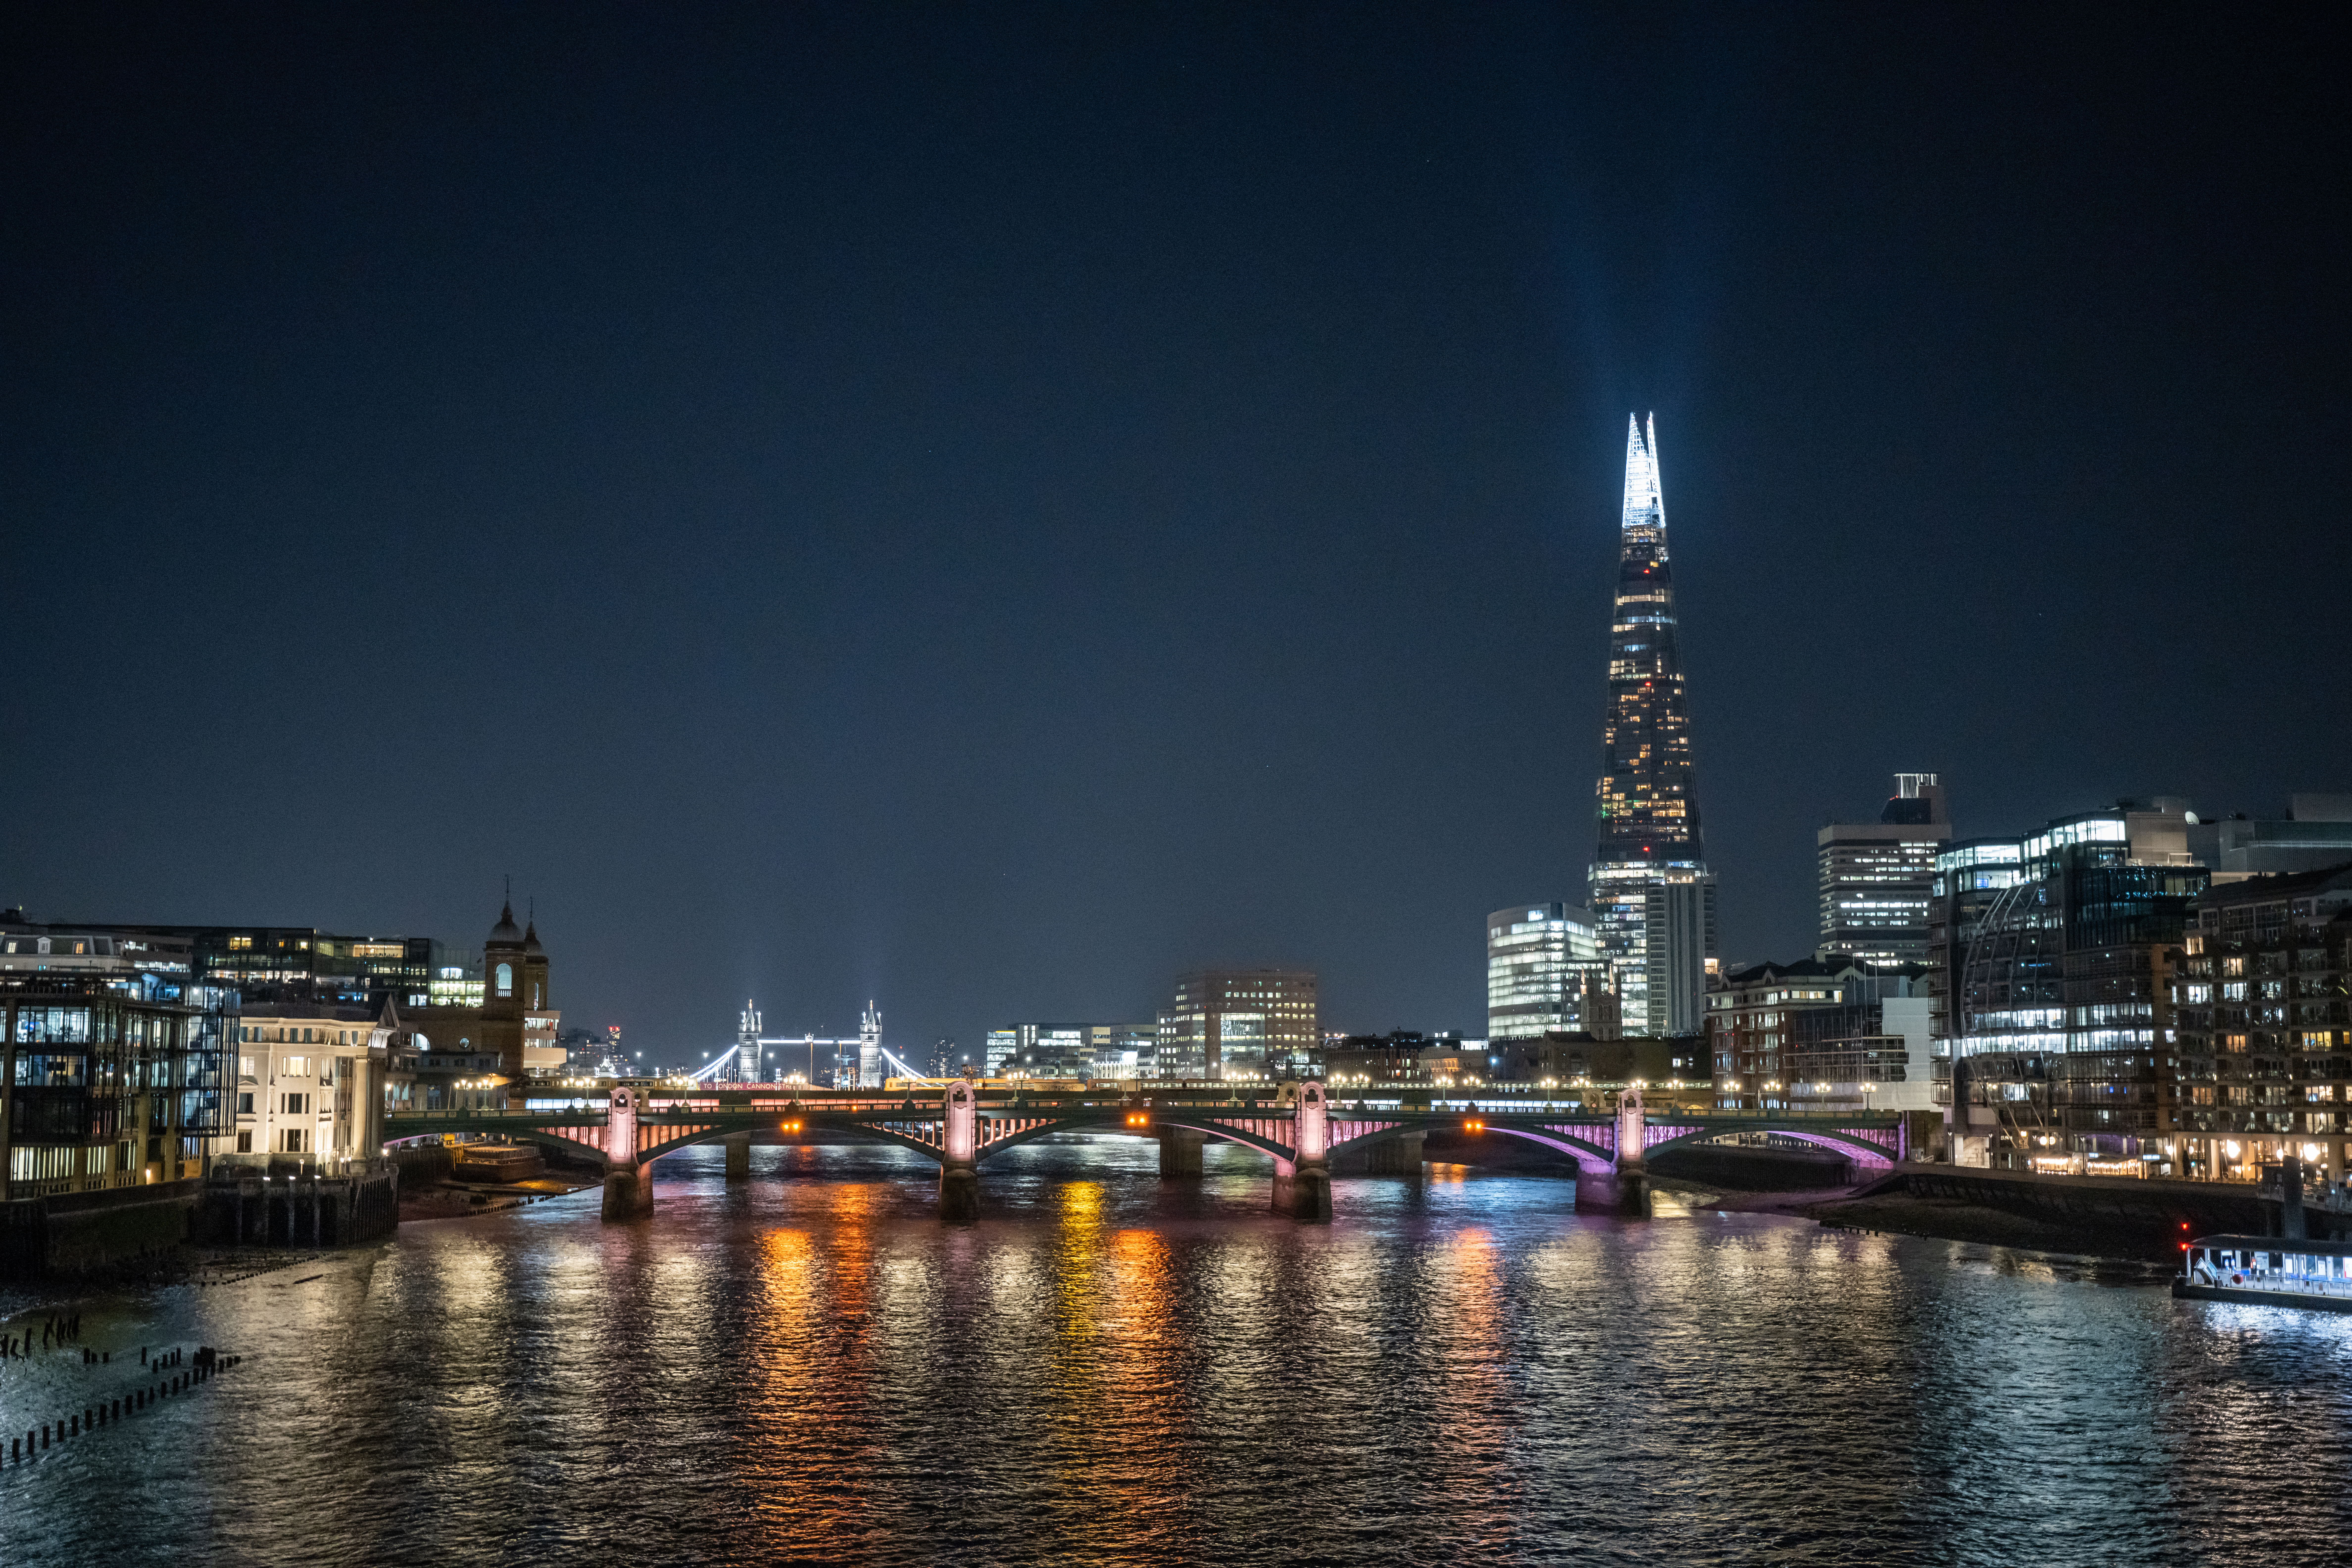 Sony FE 16-35mm F4 G London night scene sample image